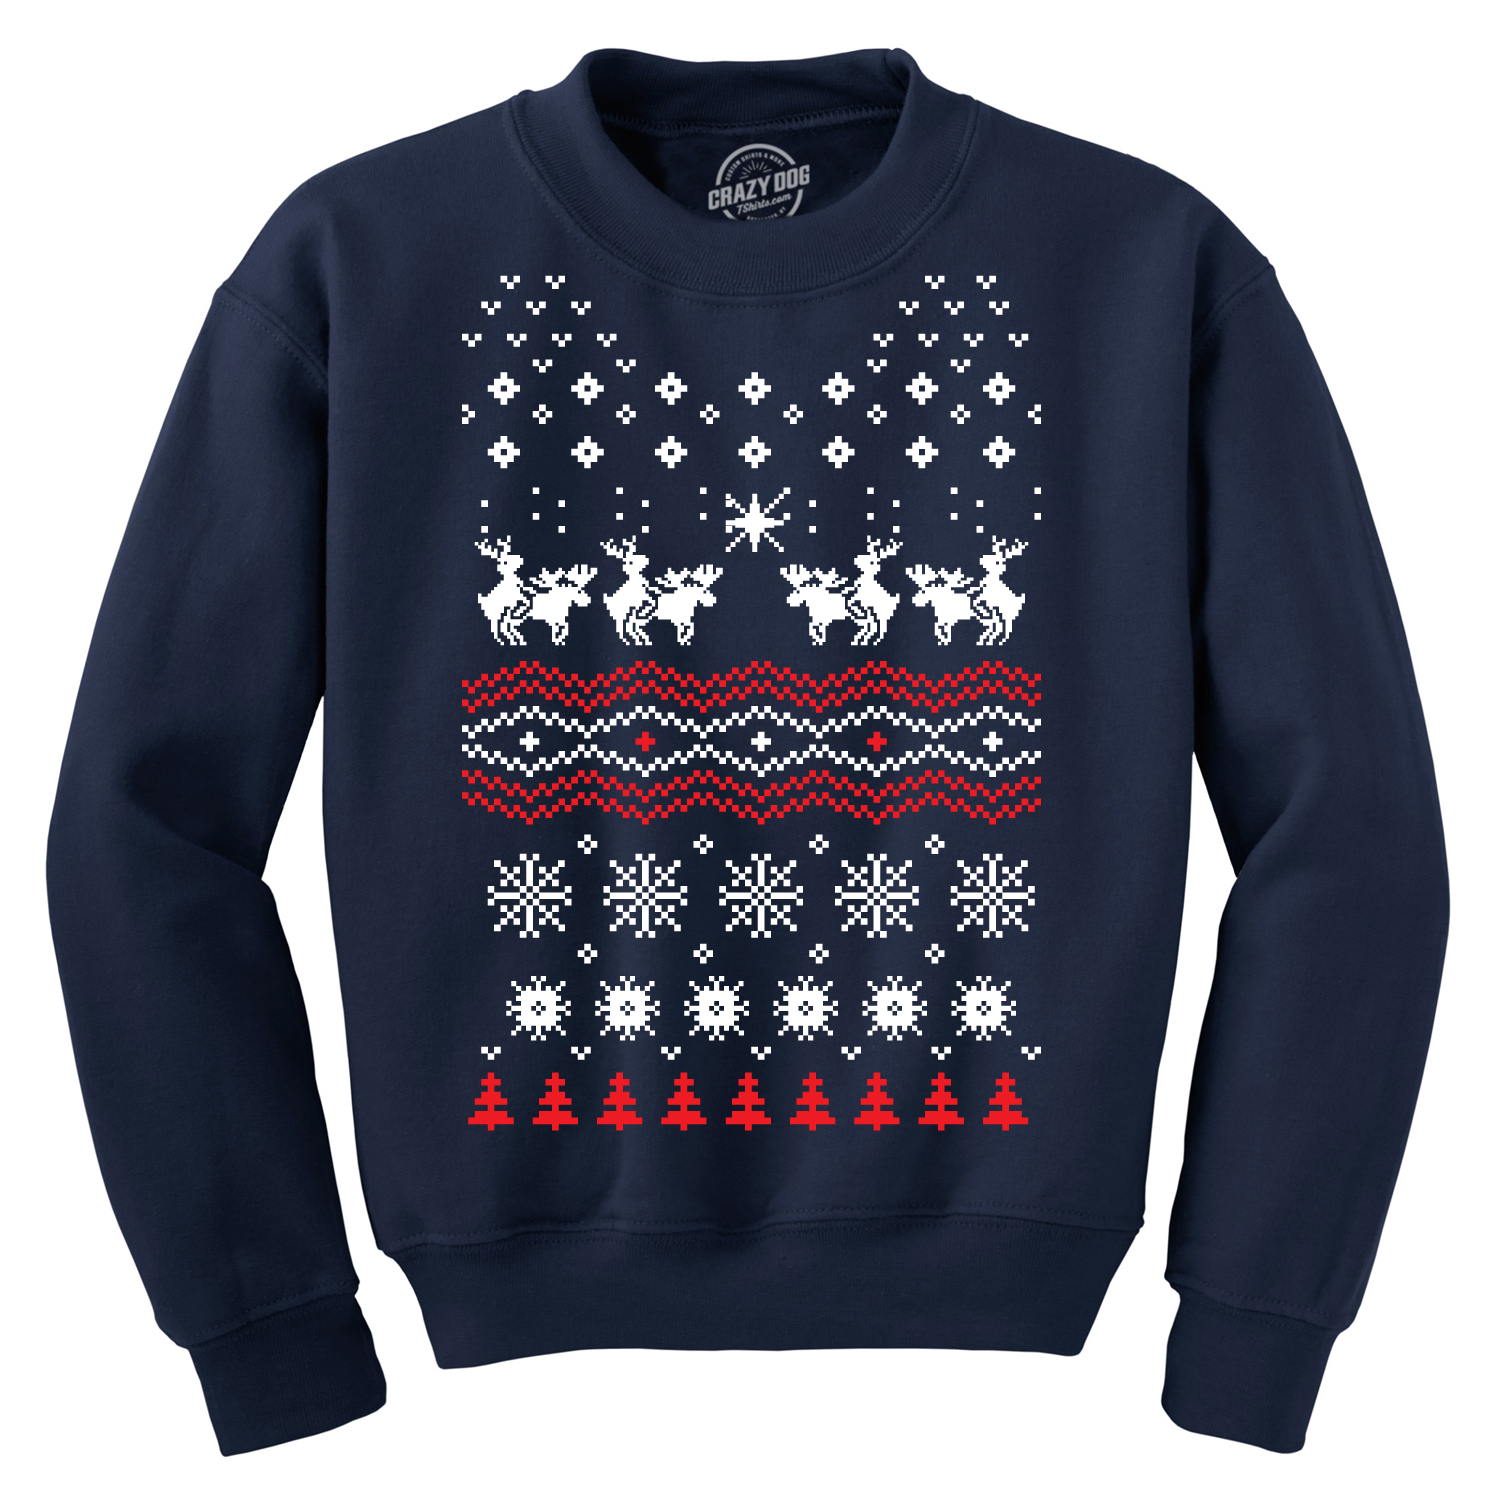 Crazy Dog Tshirts Humping Moose Funny Ugly Christmas Holiday Xmas Sweatshirt Offensive Party Tee